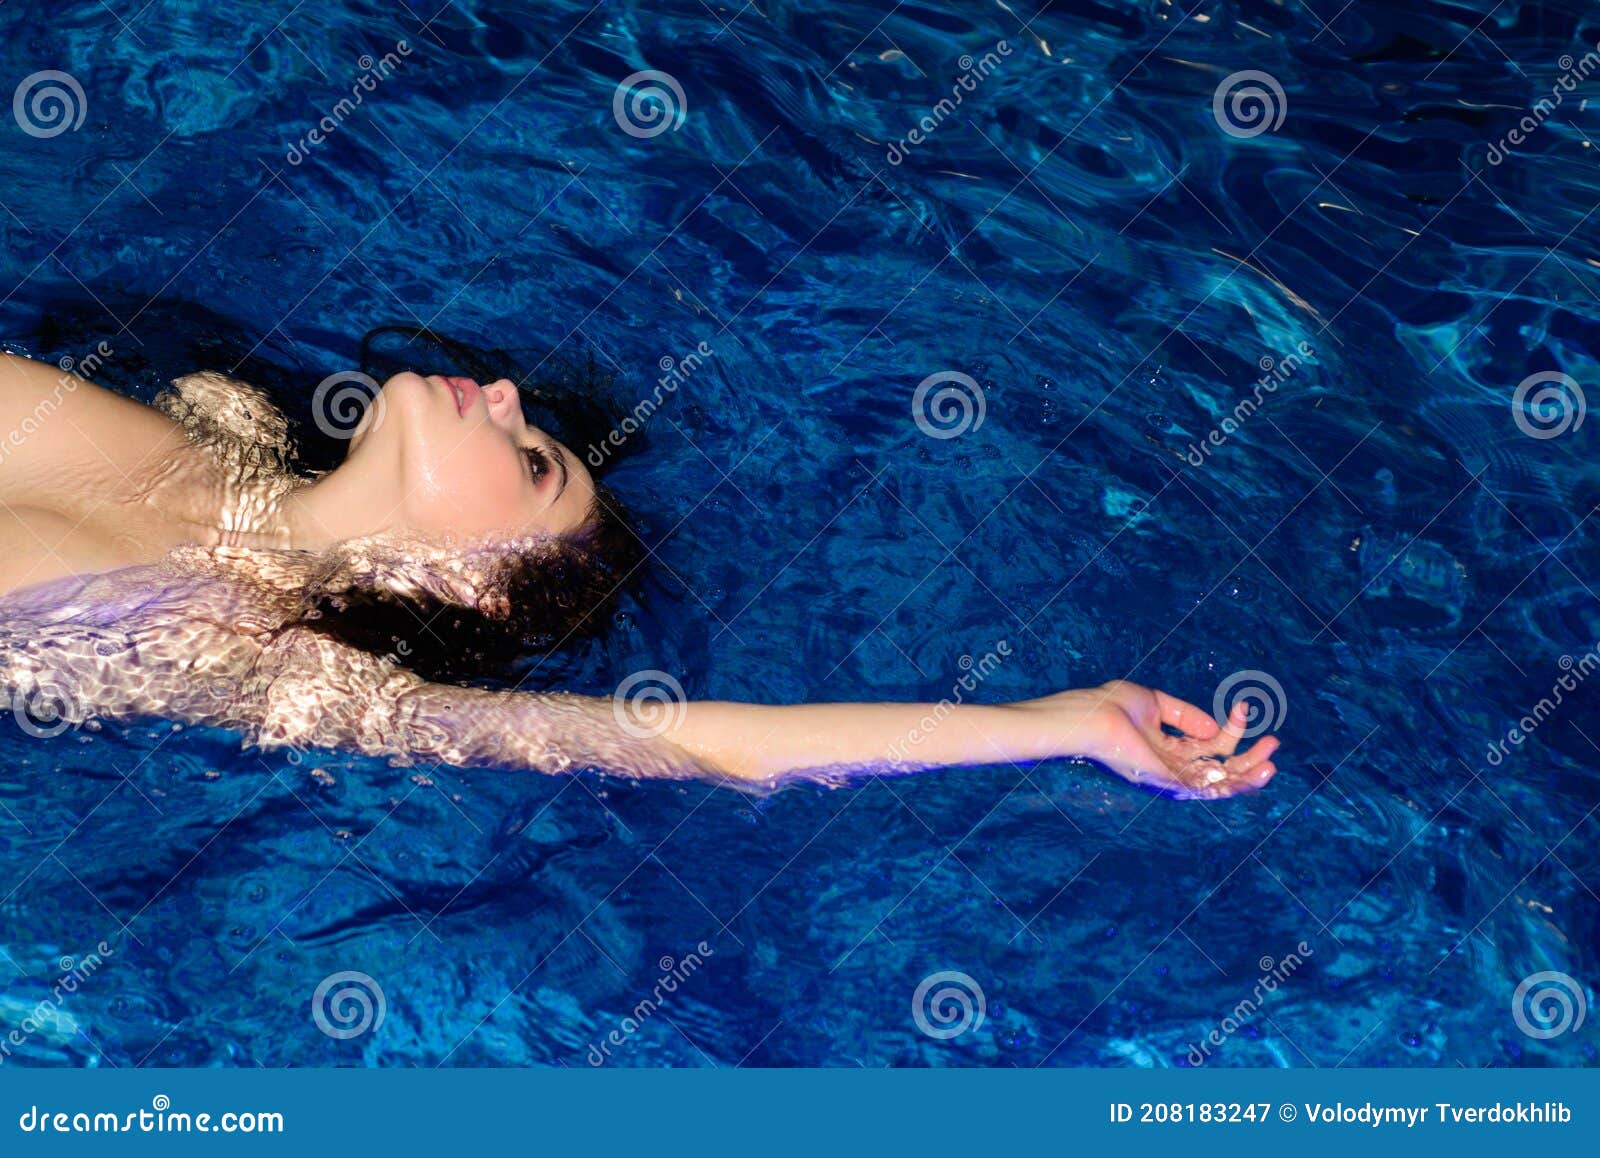 batrisyia balqis reccomend swimming in pool naked pic